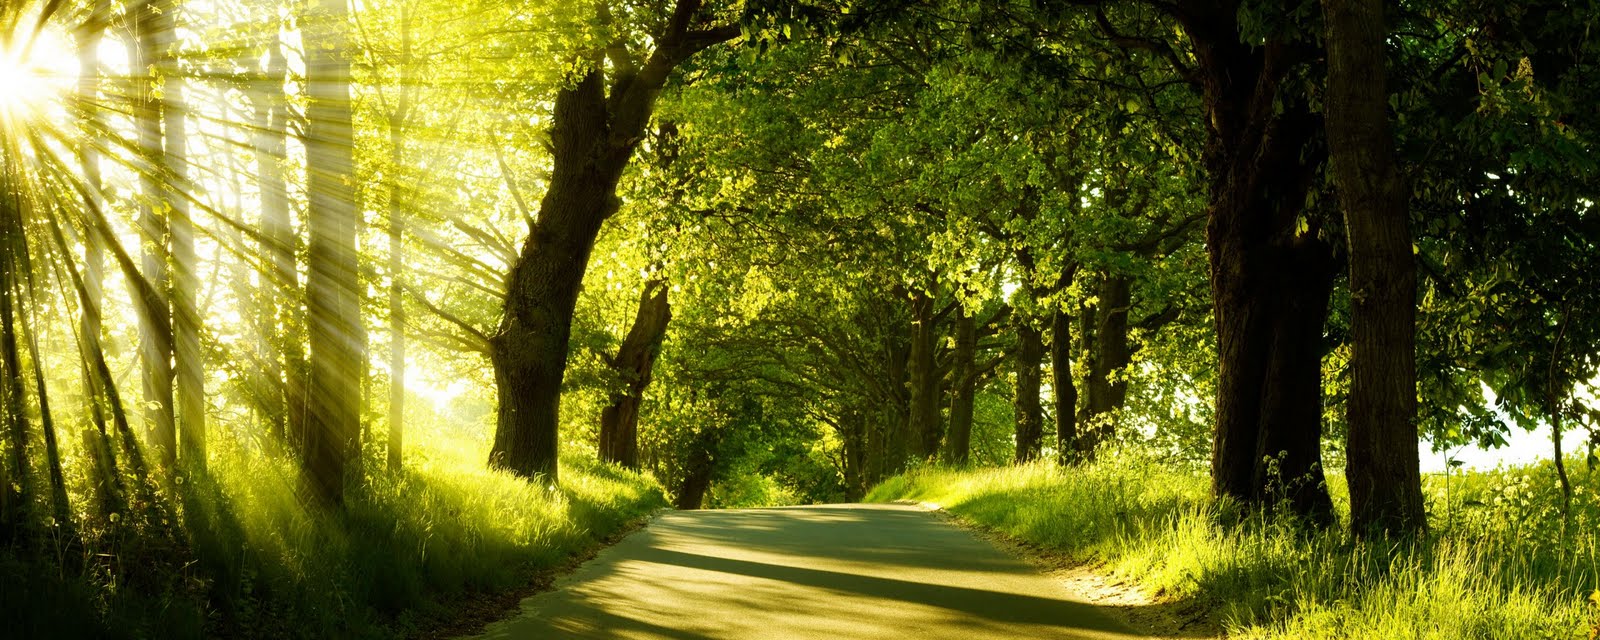 Desktop Nature wallpaper: beautiful pictures of green nature ...